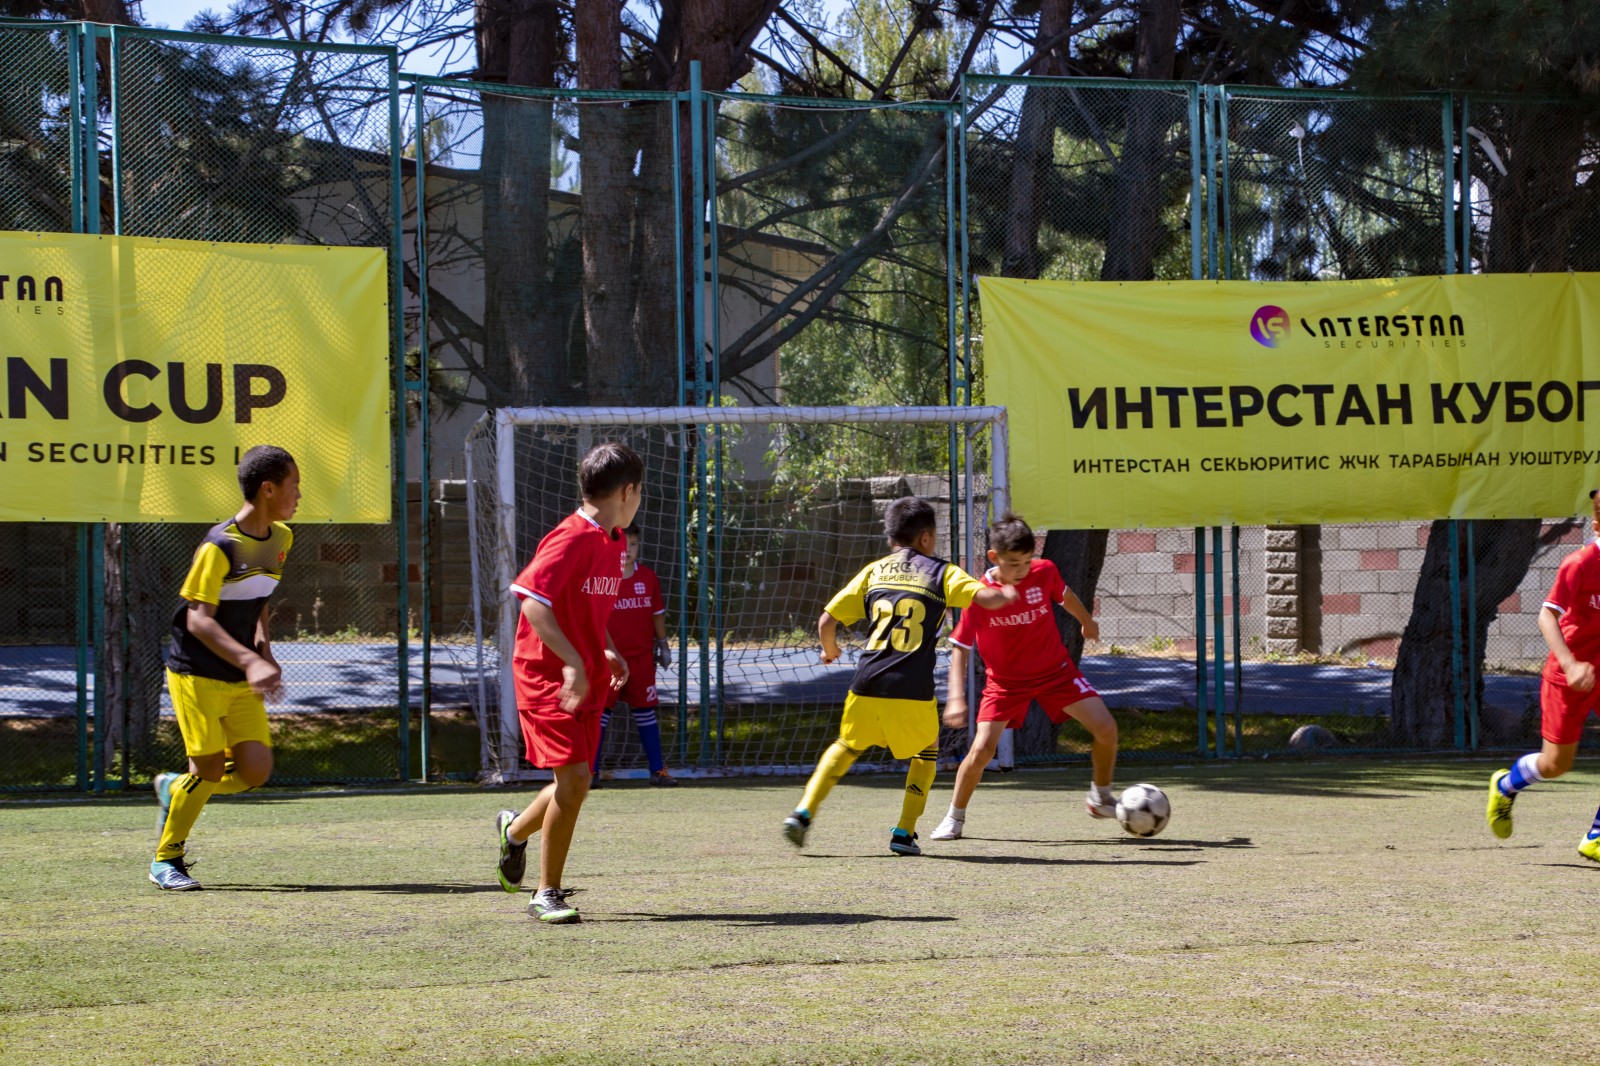 Interstan Securities Interstan Football Cup Kyrgyzstan 2022